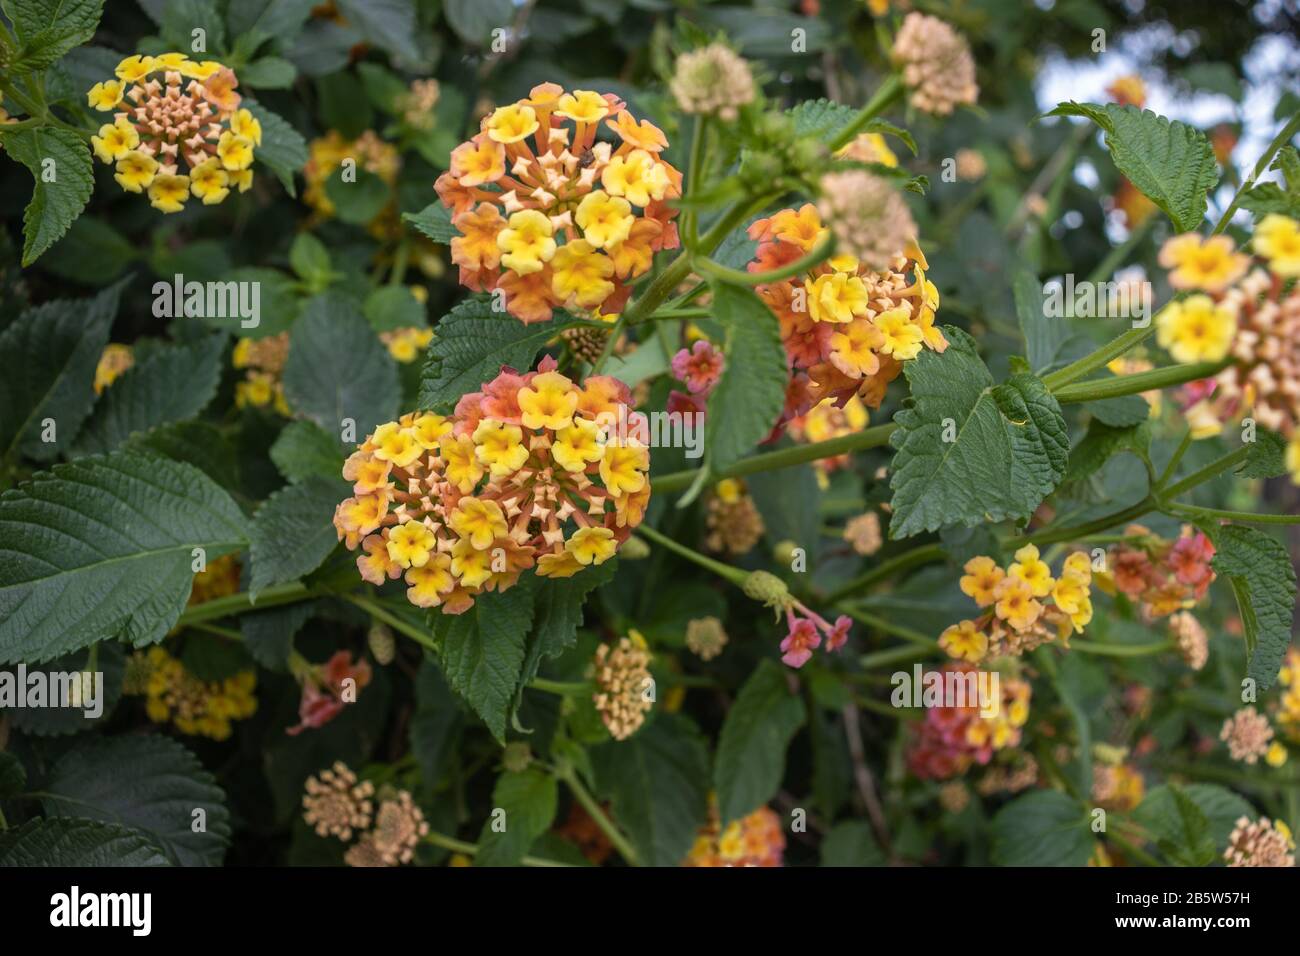 Blooming yellow lantana flowers on green bushes Stock Photo